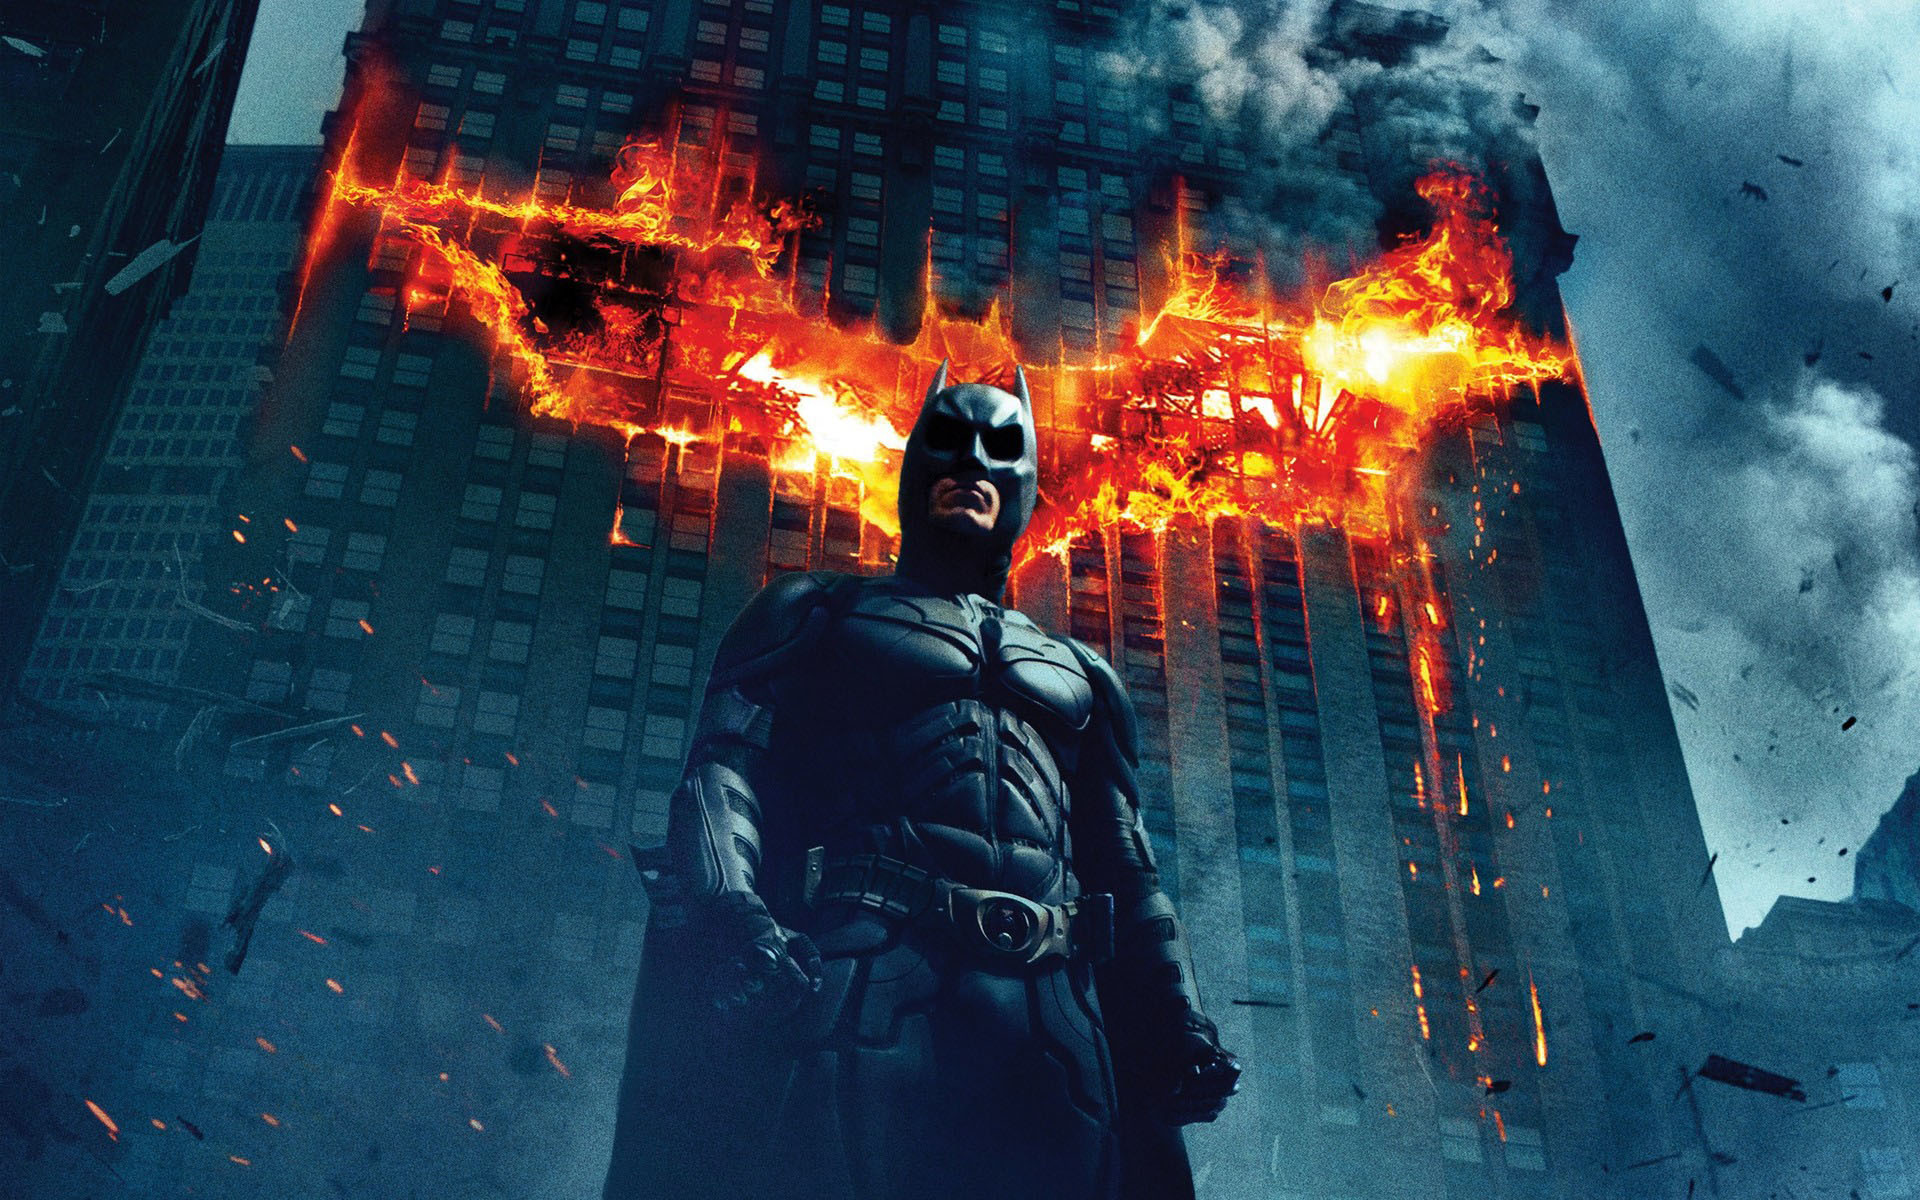 Fire Bat-Signal on a building – The Dark Knight wallpaper